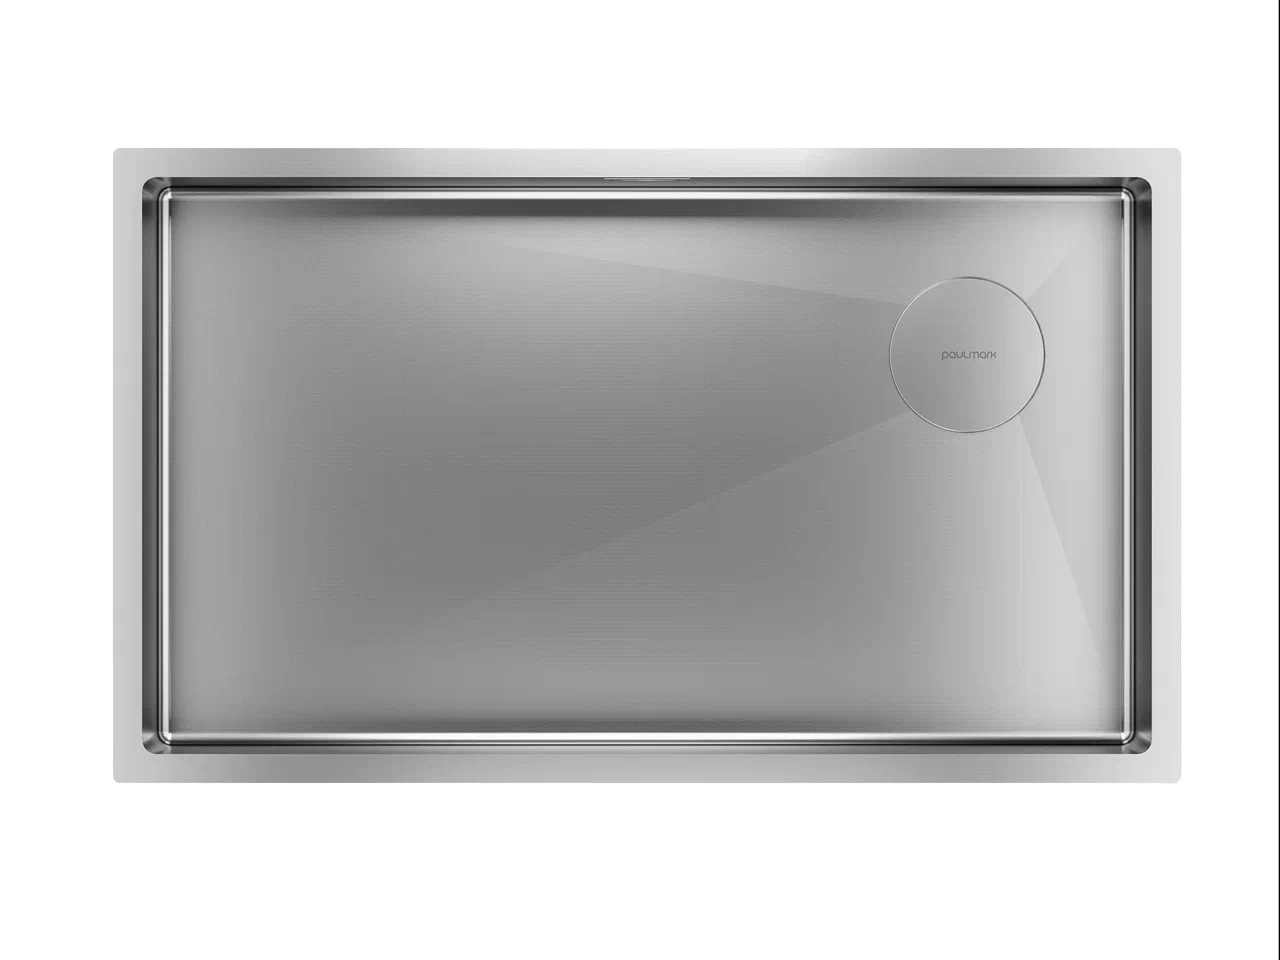 Кухонная мойка Paulmark Next-Skew 740 PM887444-BS брашированная сталь, цвет хром - фото 1